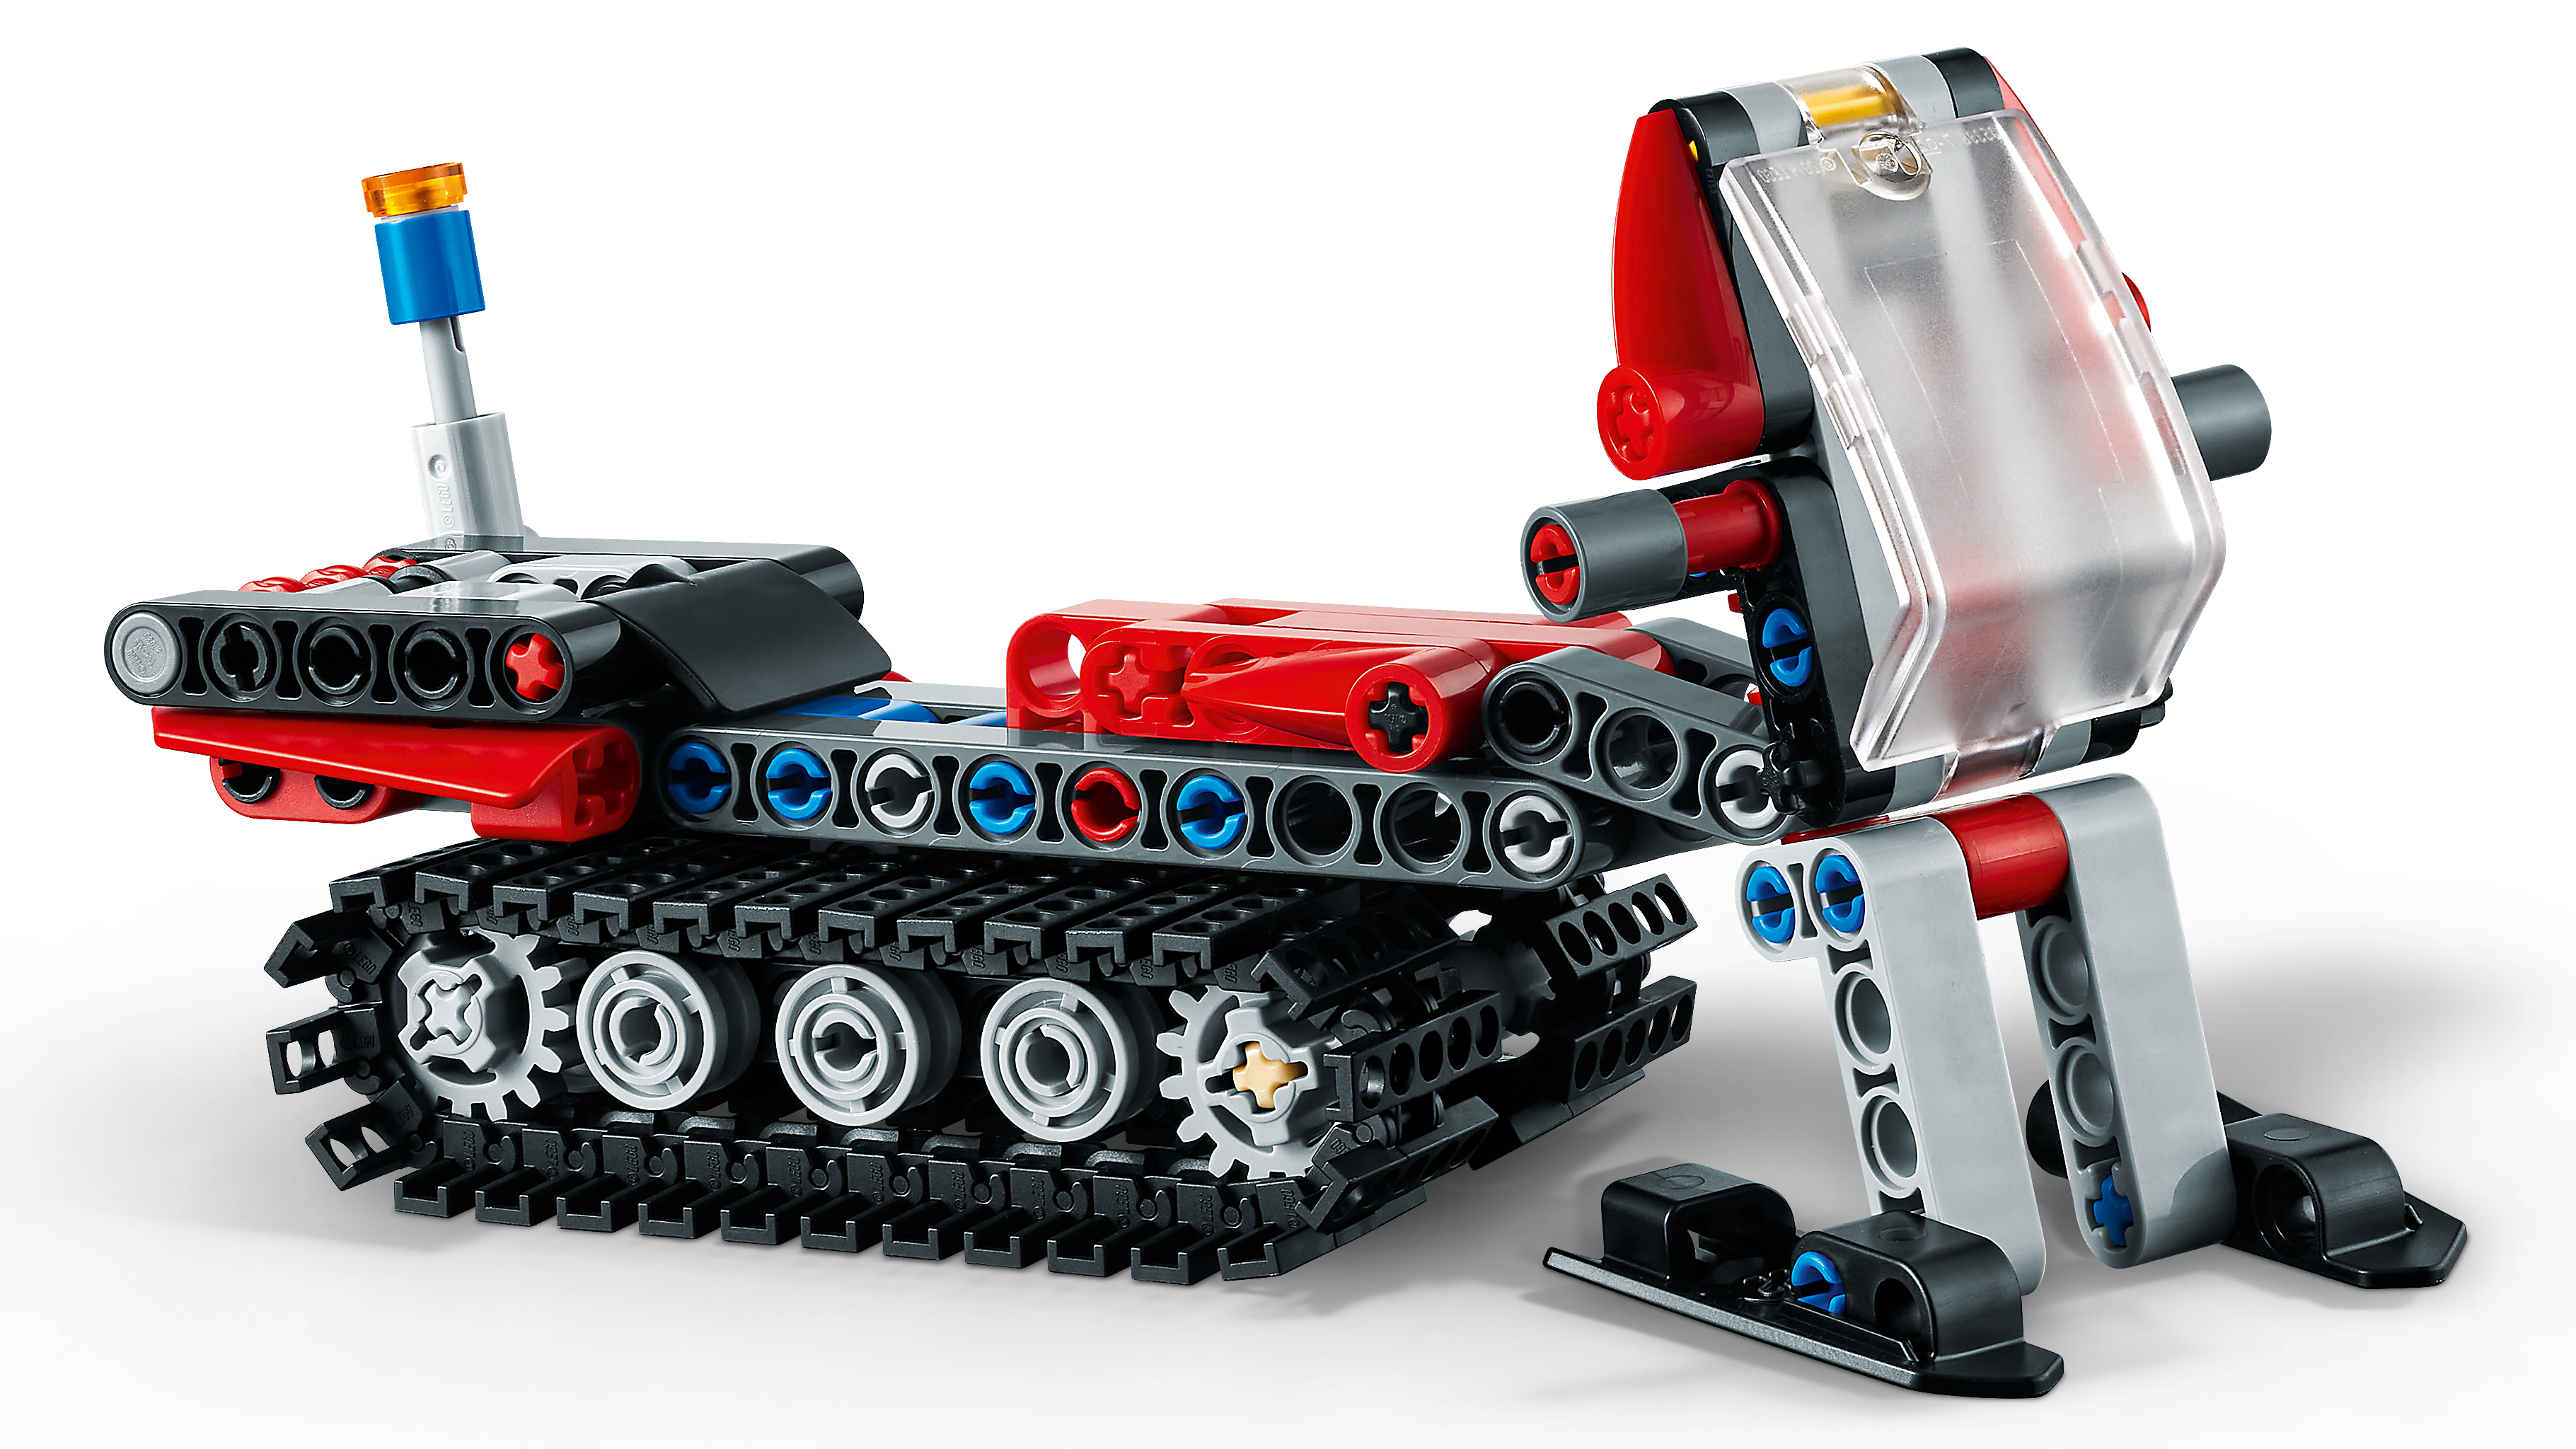 Snow 42148 - Technic Sets - LEGO.com for kids